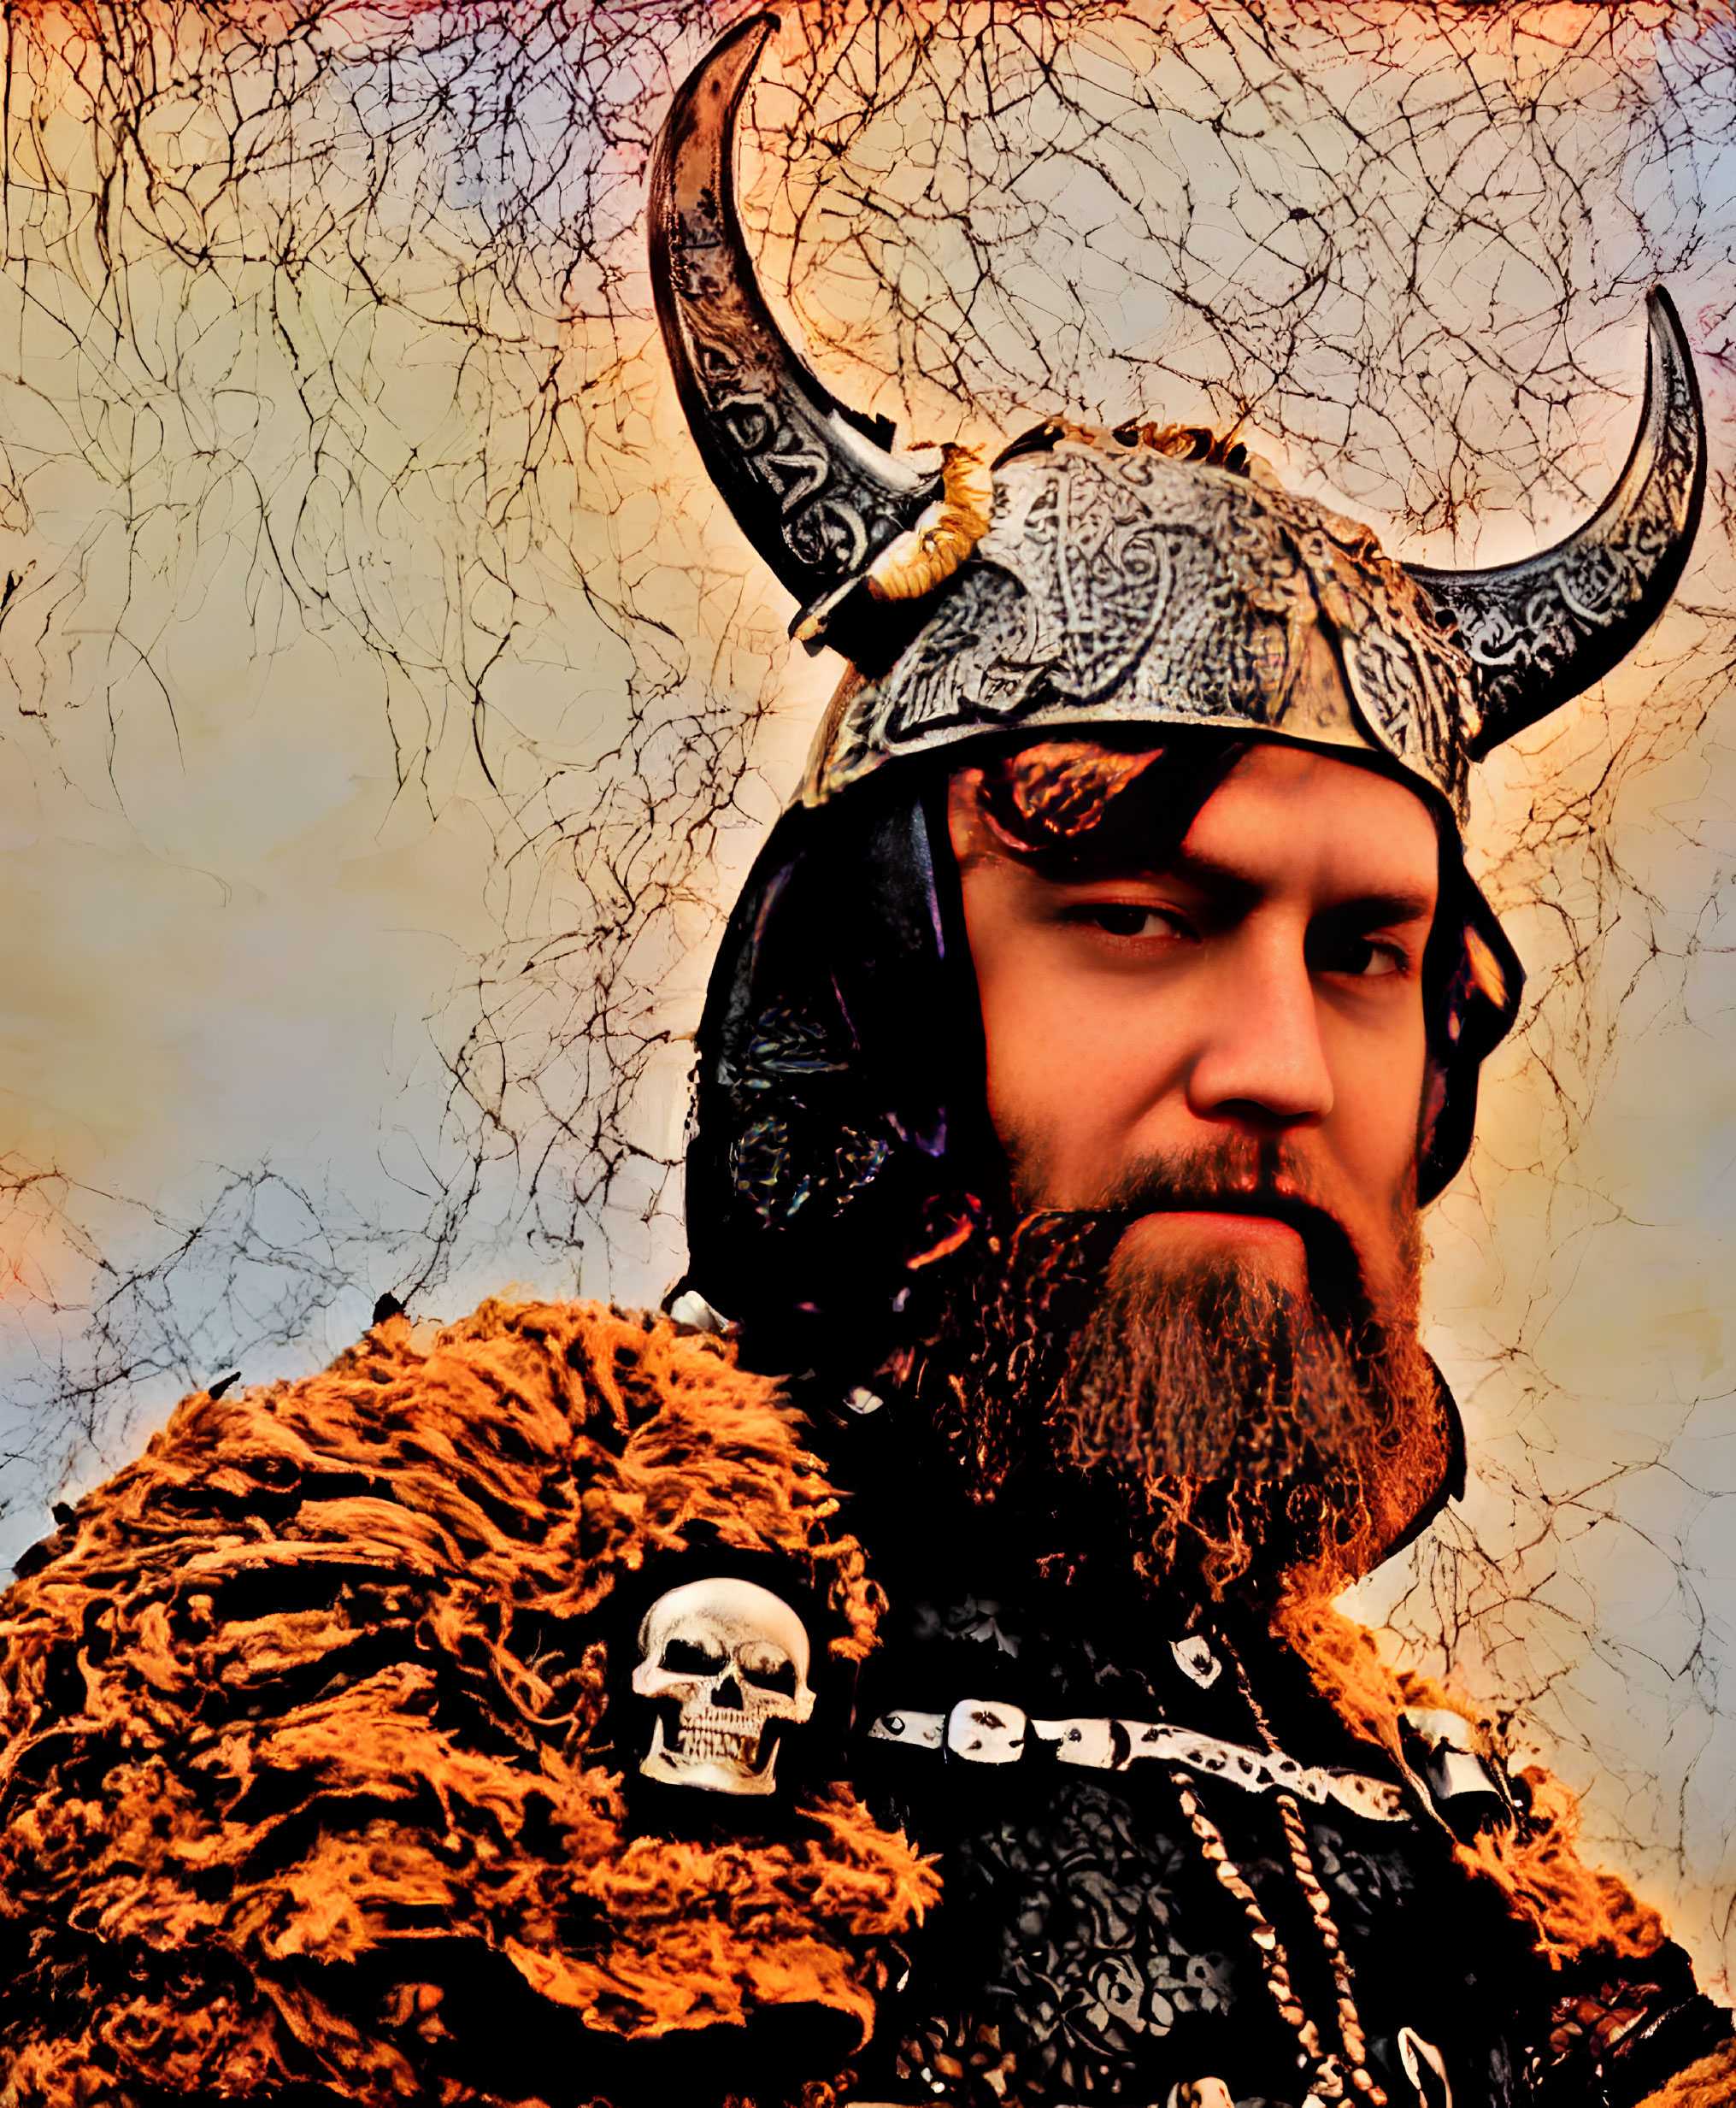 Viking costume with horned helmet, fur cloak, and skull necklace on crackled background